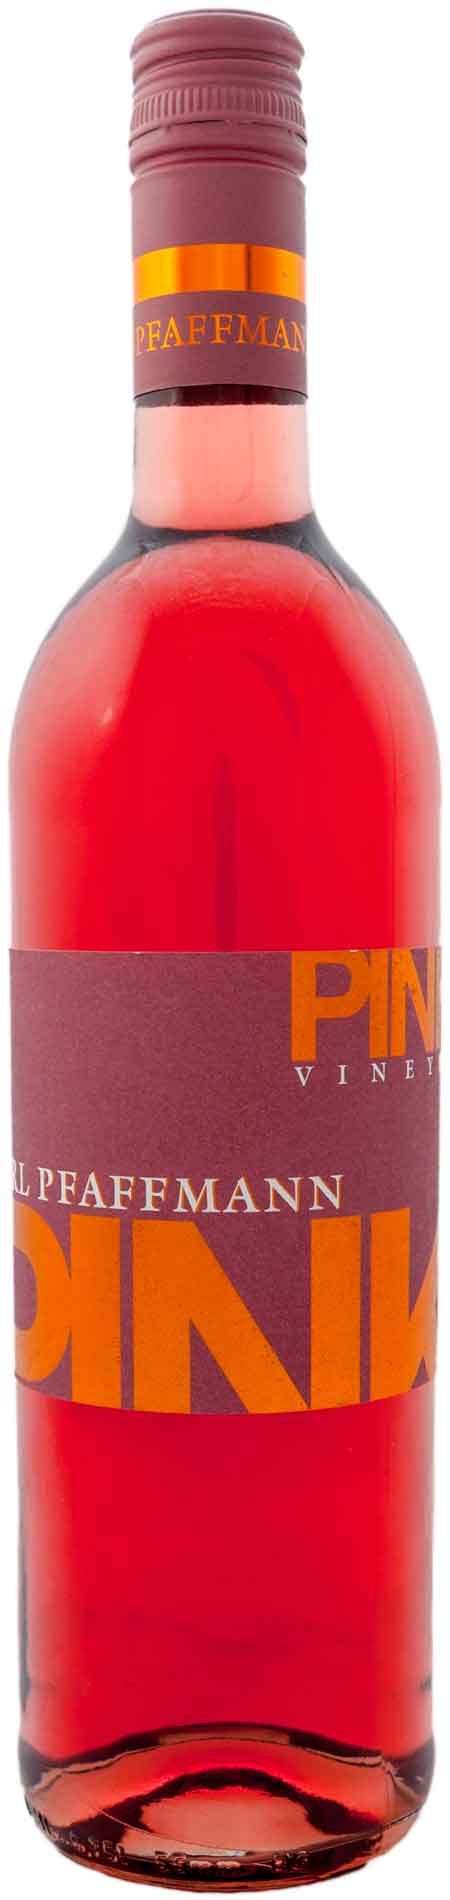 2016 Pink Vineyard - Karl Pfaffmann